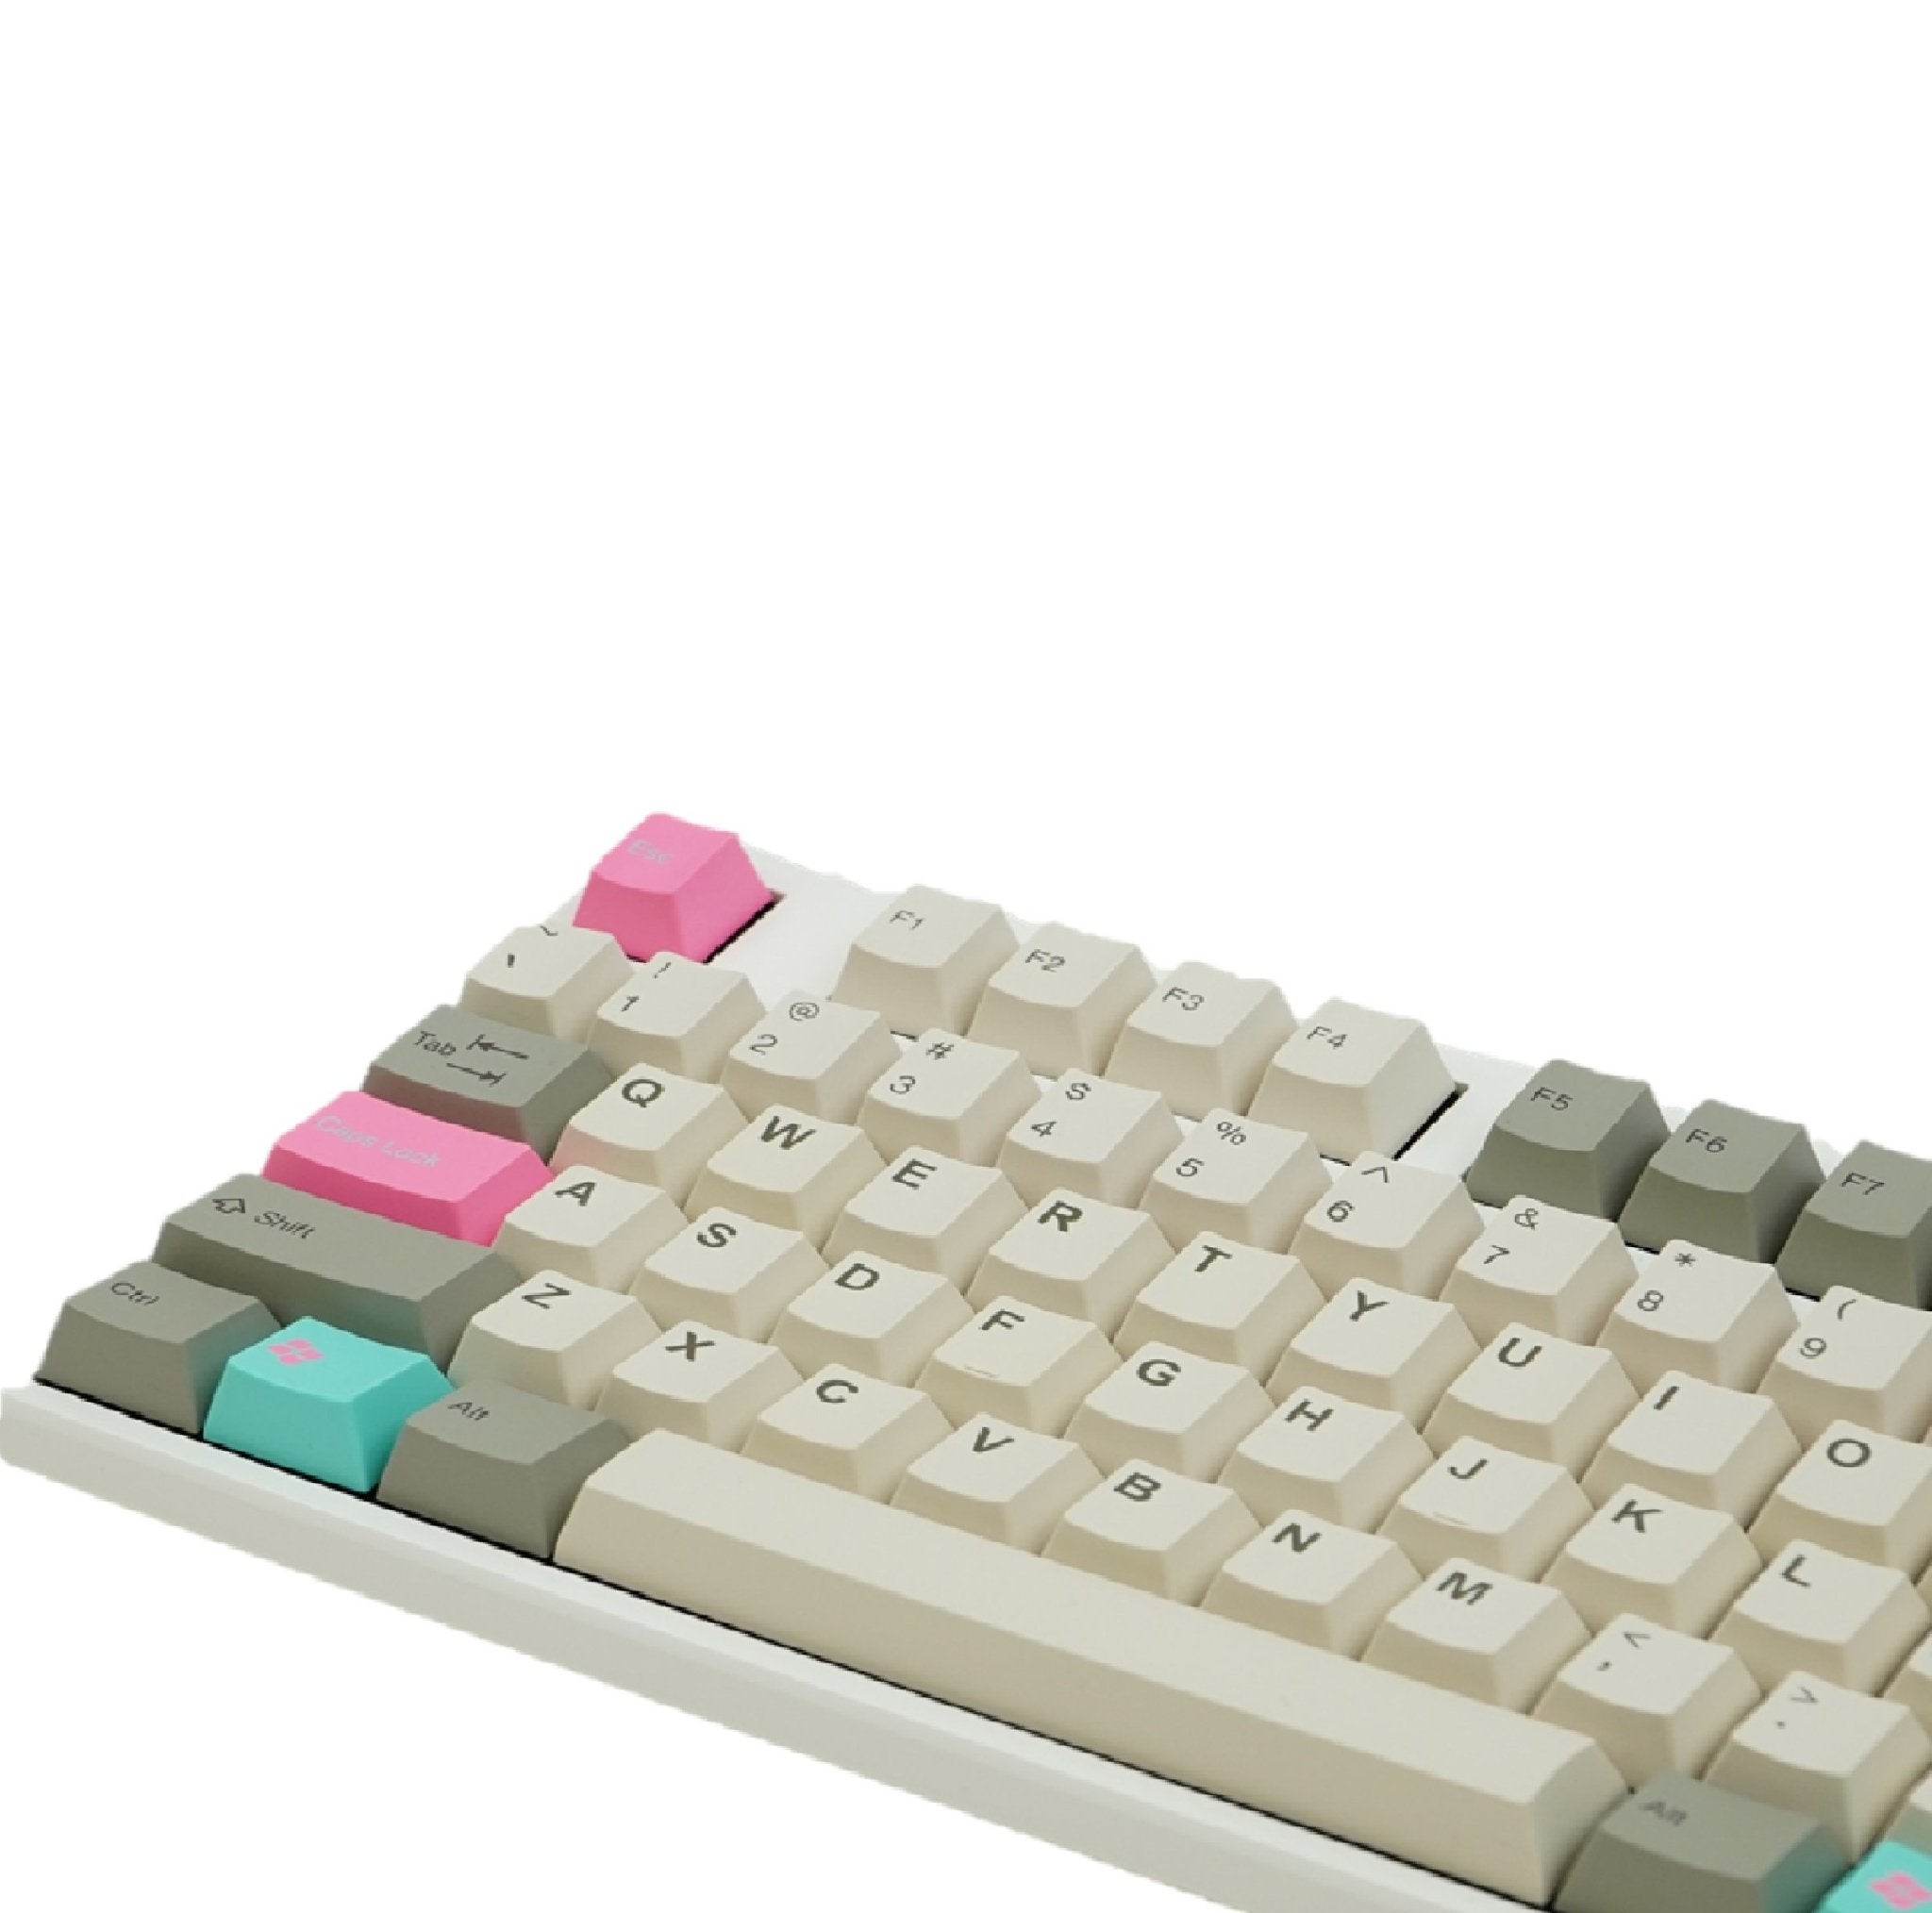 Tai-Hao 104 Keys-Double Shot Keycap + 1 Keys Puller - Grey+Blue+Pink - Store 974 | ستور ٩٧٤